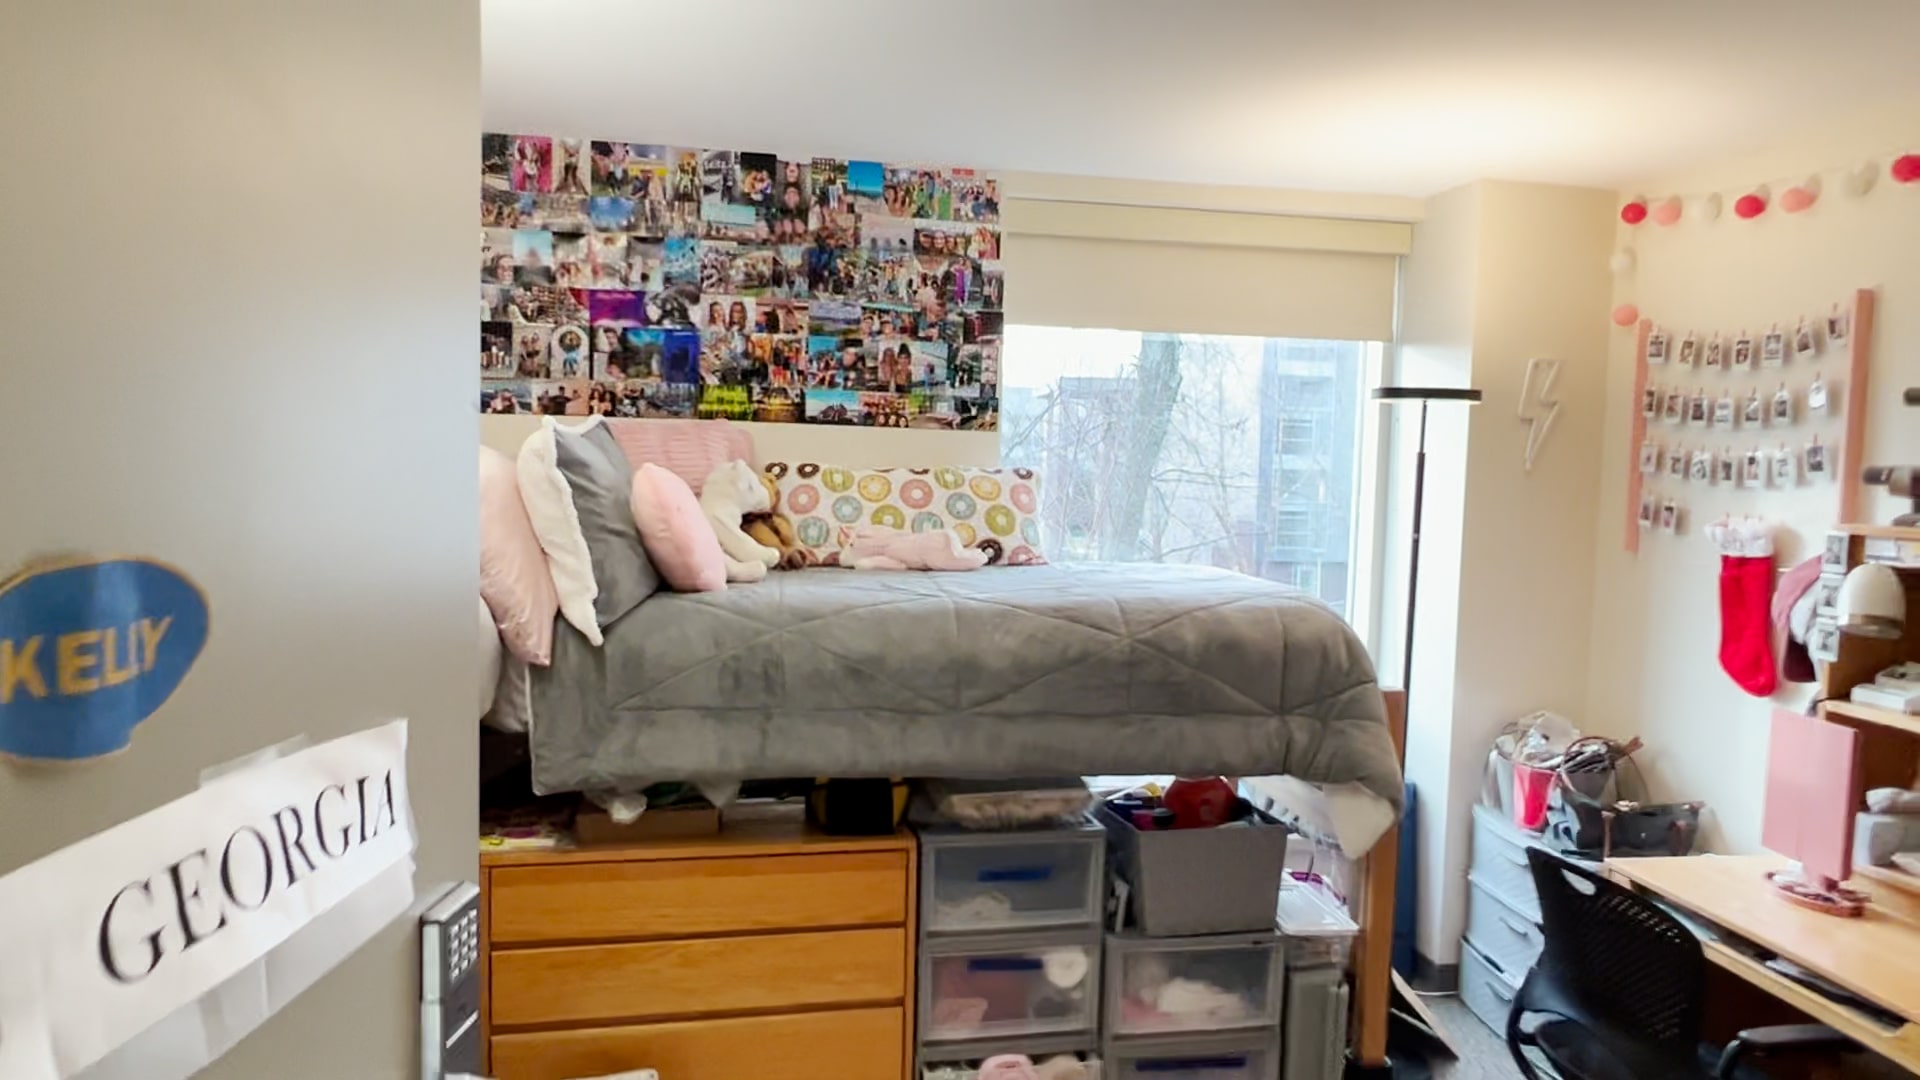 Housing video dorm room image